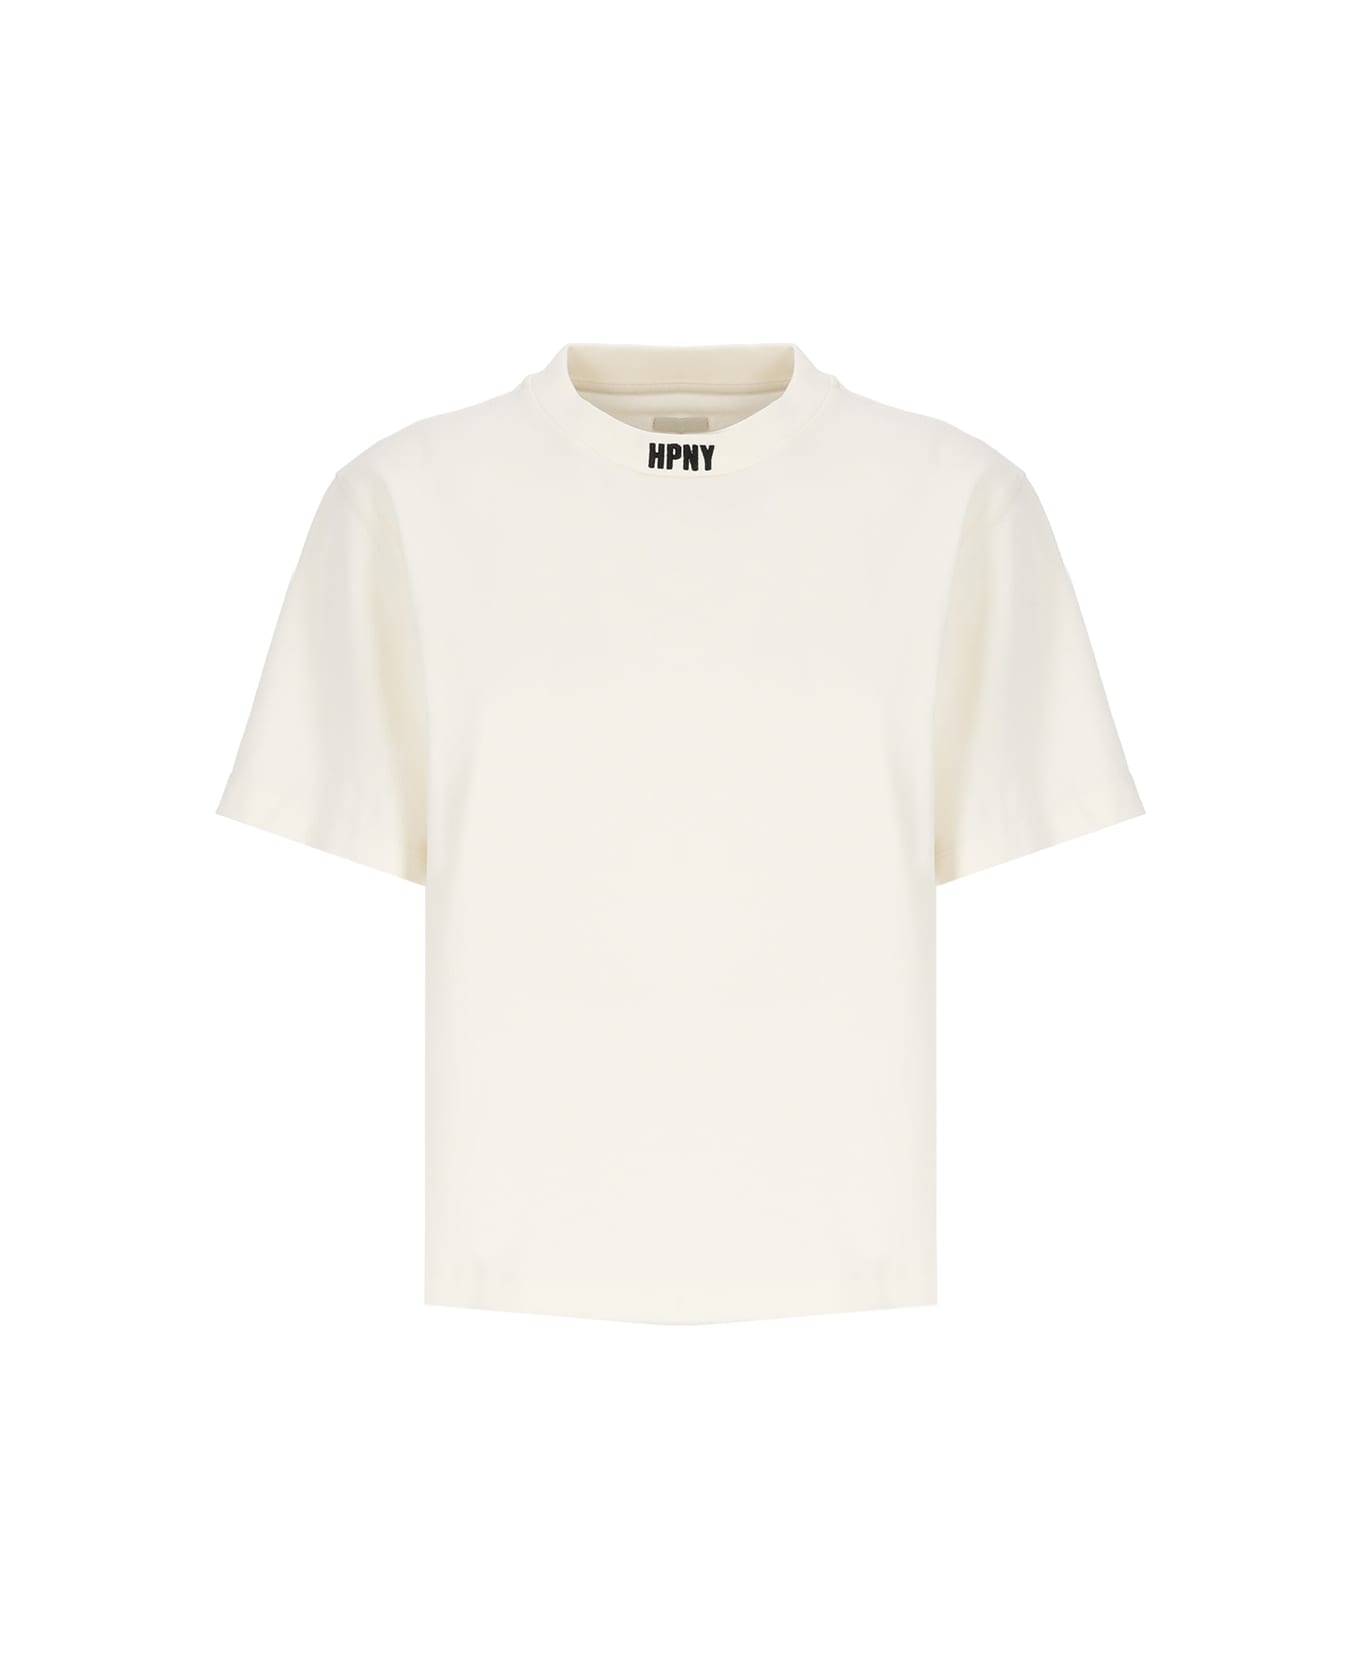 HERON PRESTON Hpny T-shirt - White Black Tシャツ